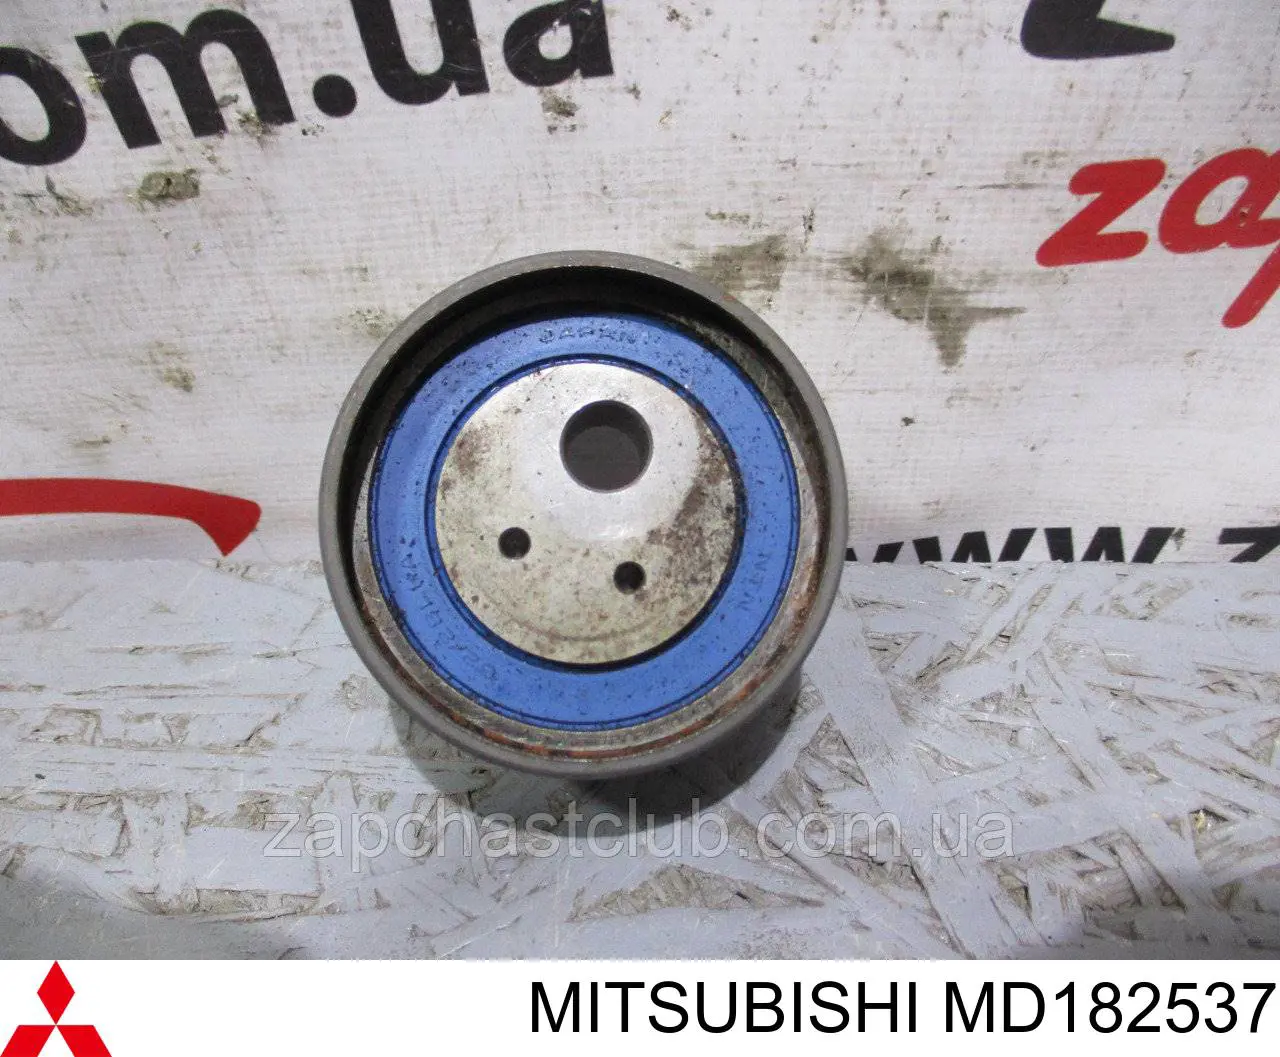 MD182537 Mitsubishi ролик грм